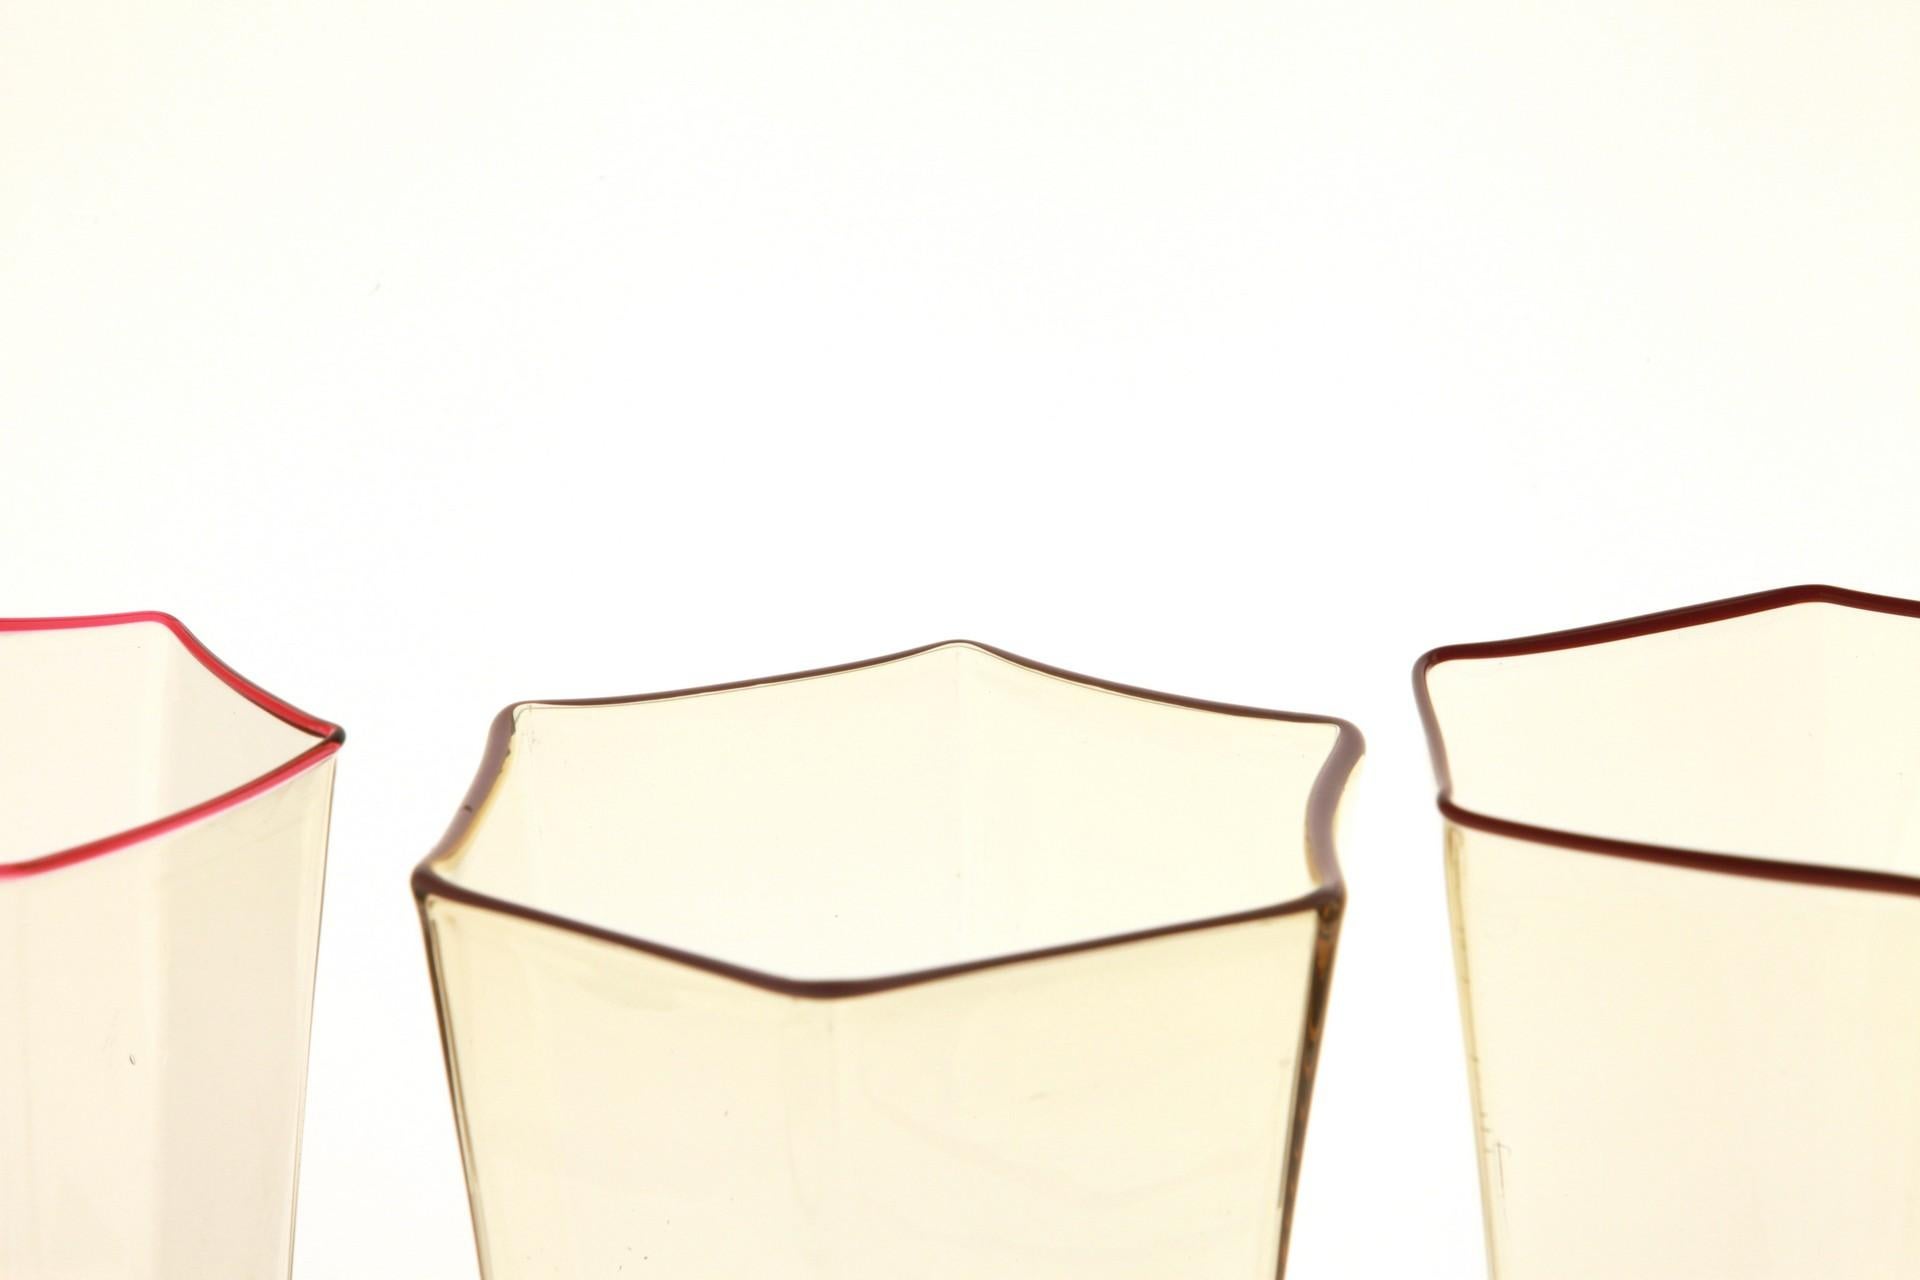 Six Hexagonal Pagliesco Glasses, Assorted Color Rim, Carlo Scarpa, 1932 Design 2